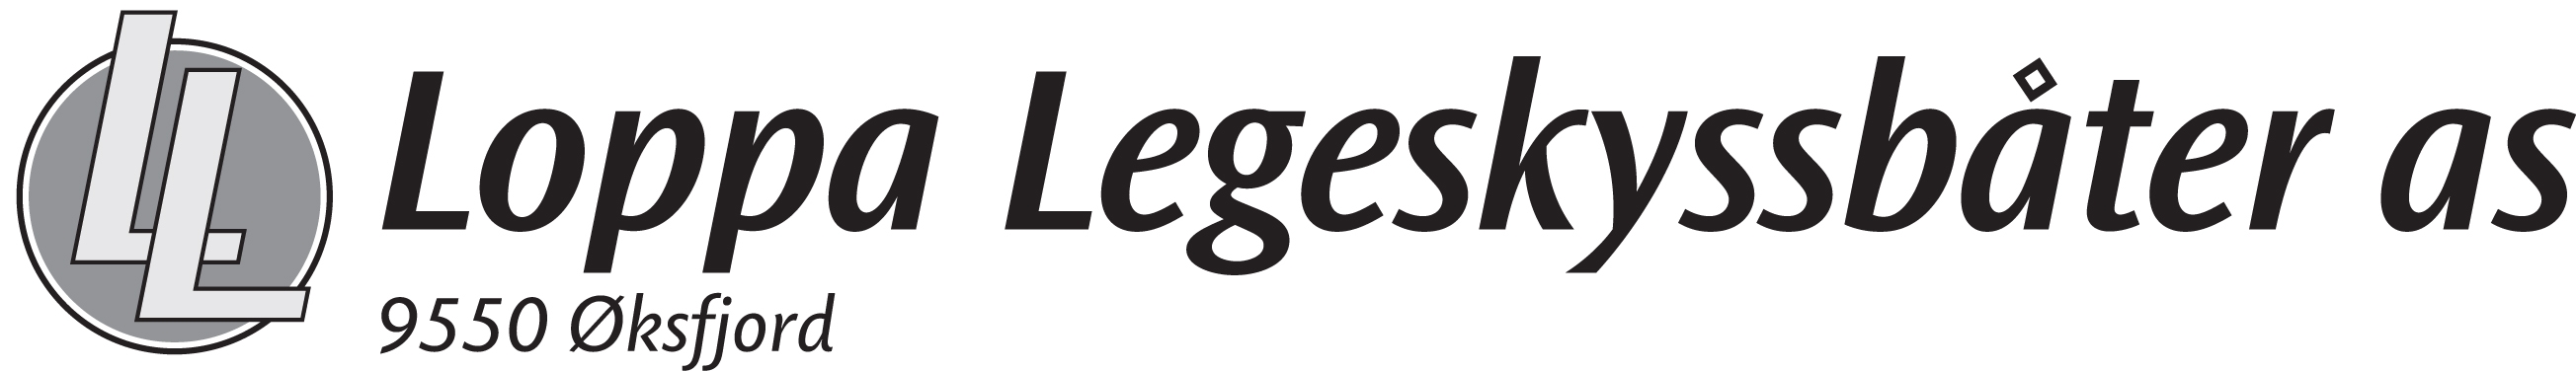 logo legeskyss.jpg